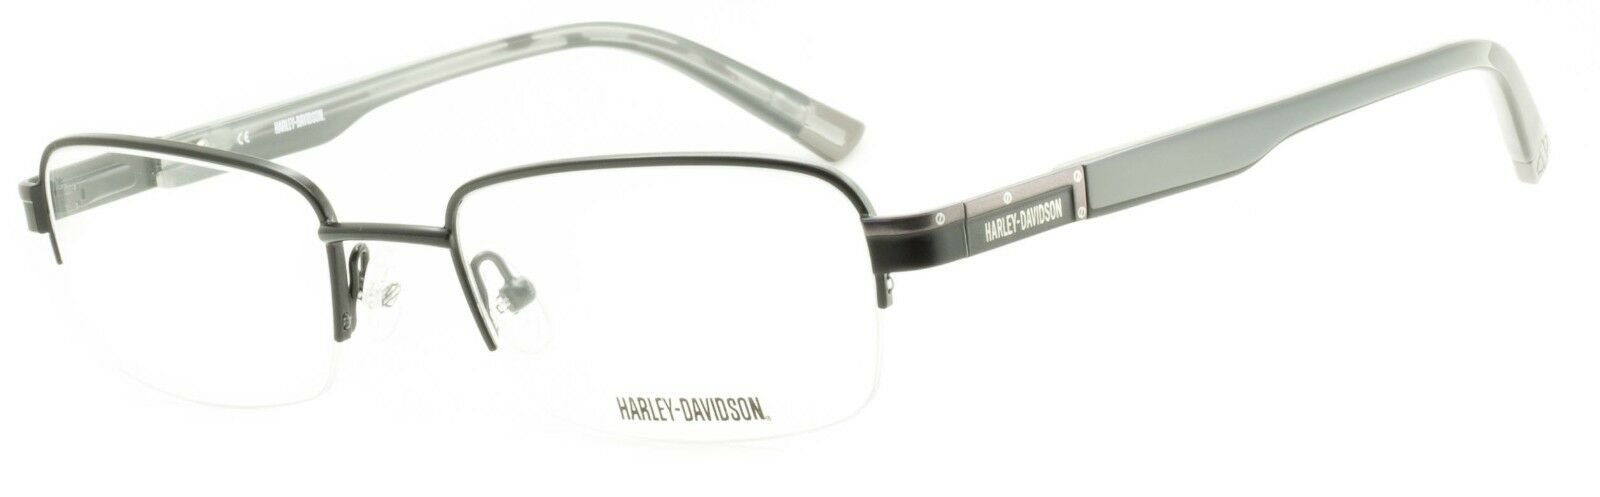 HARLEY-DAVIDSON HD 465 BLK Eyewear FRAMES RX Optical Eyeglasses Glasses New BNIB